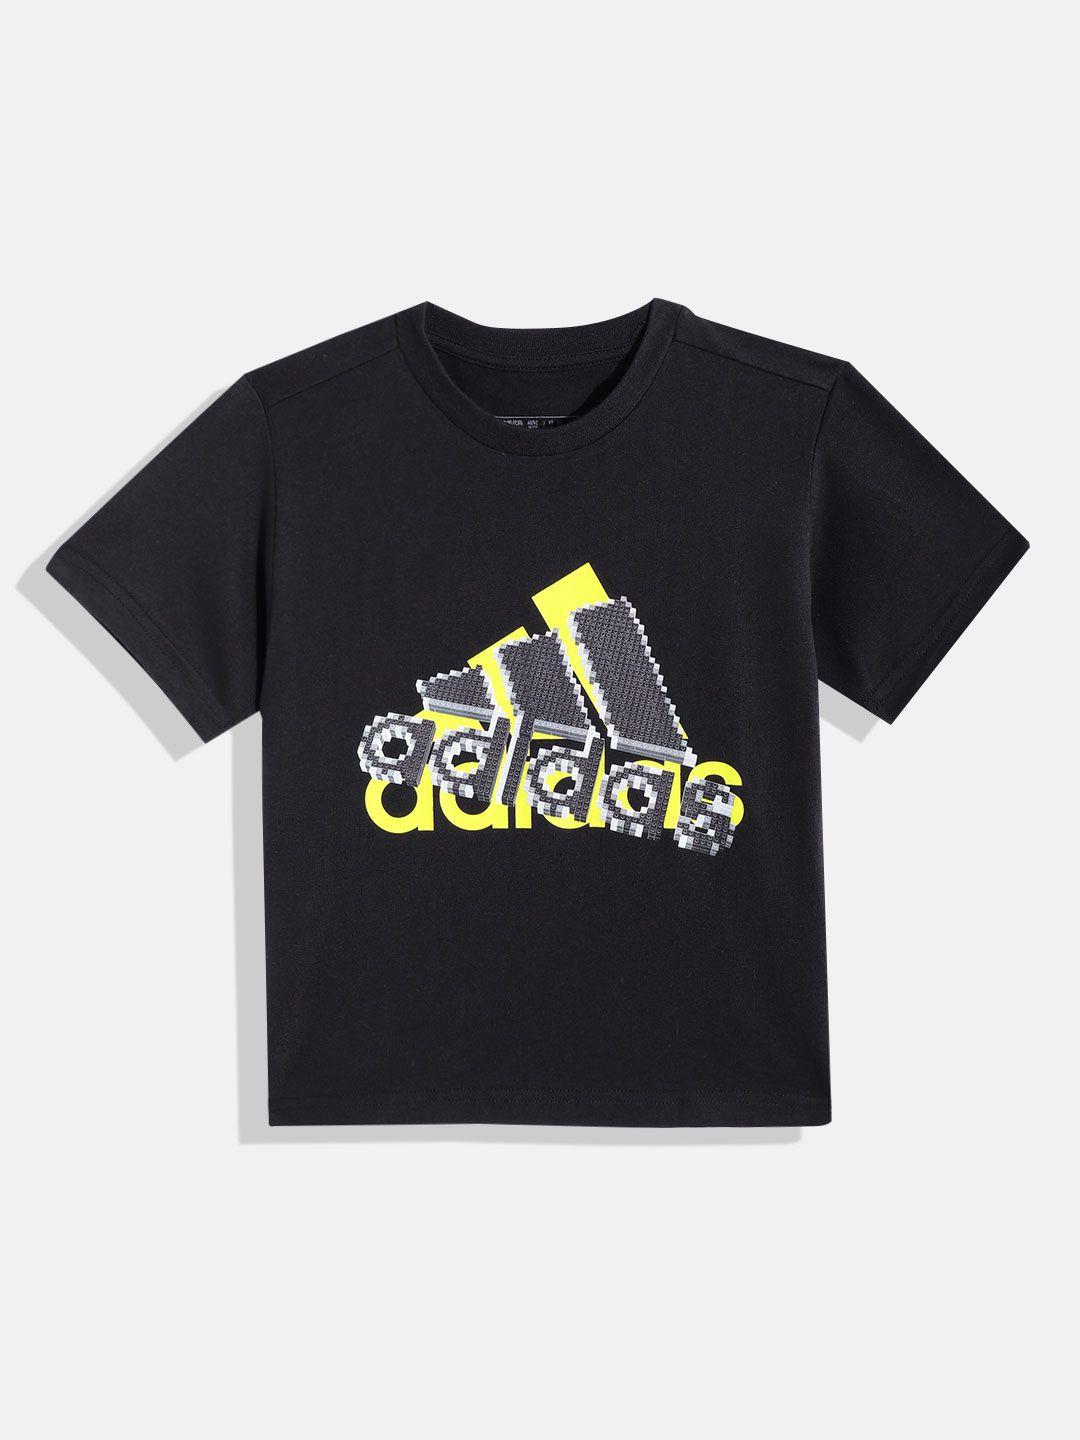 adidas kids brand logo printed pure cotton lego gt 1 t-shirt